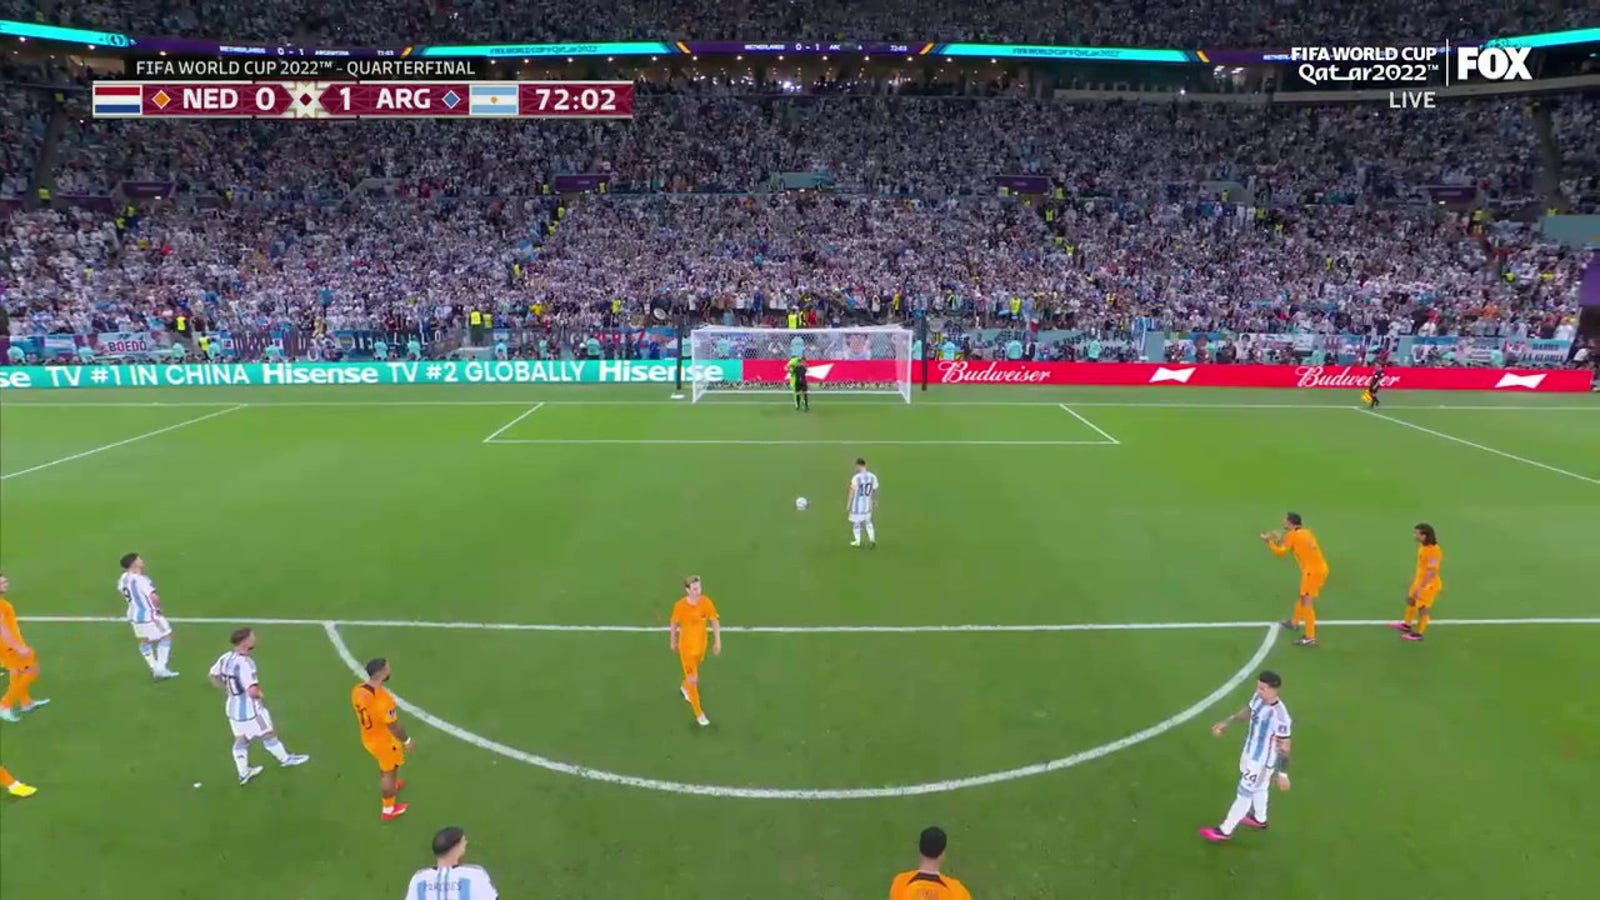 Argentina's Lionel Messi scores goal vs. Netherlands in 71' 